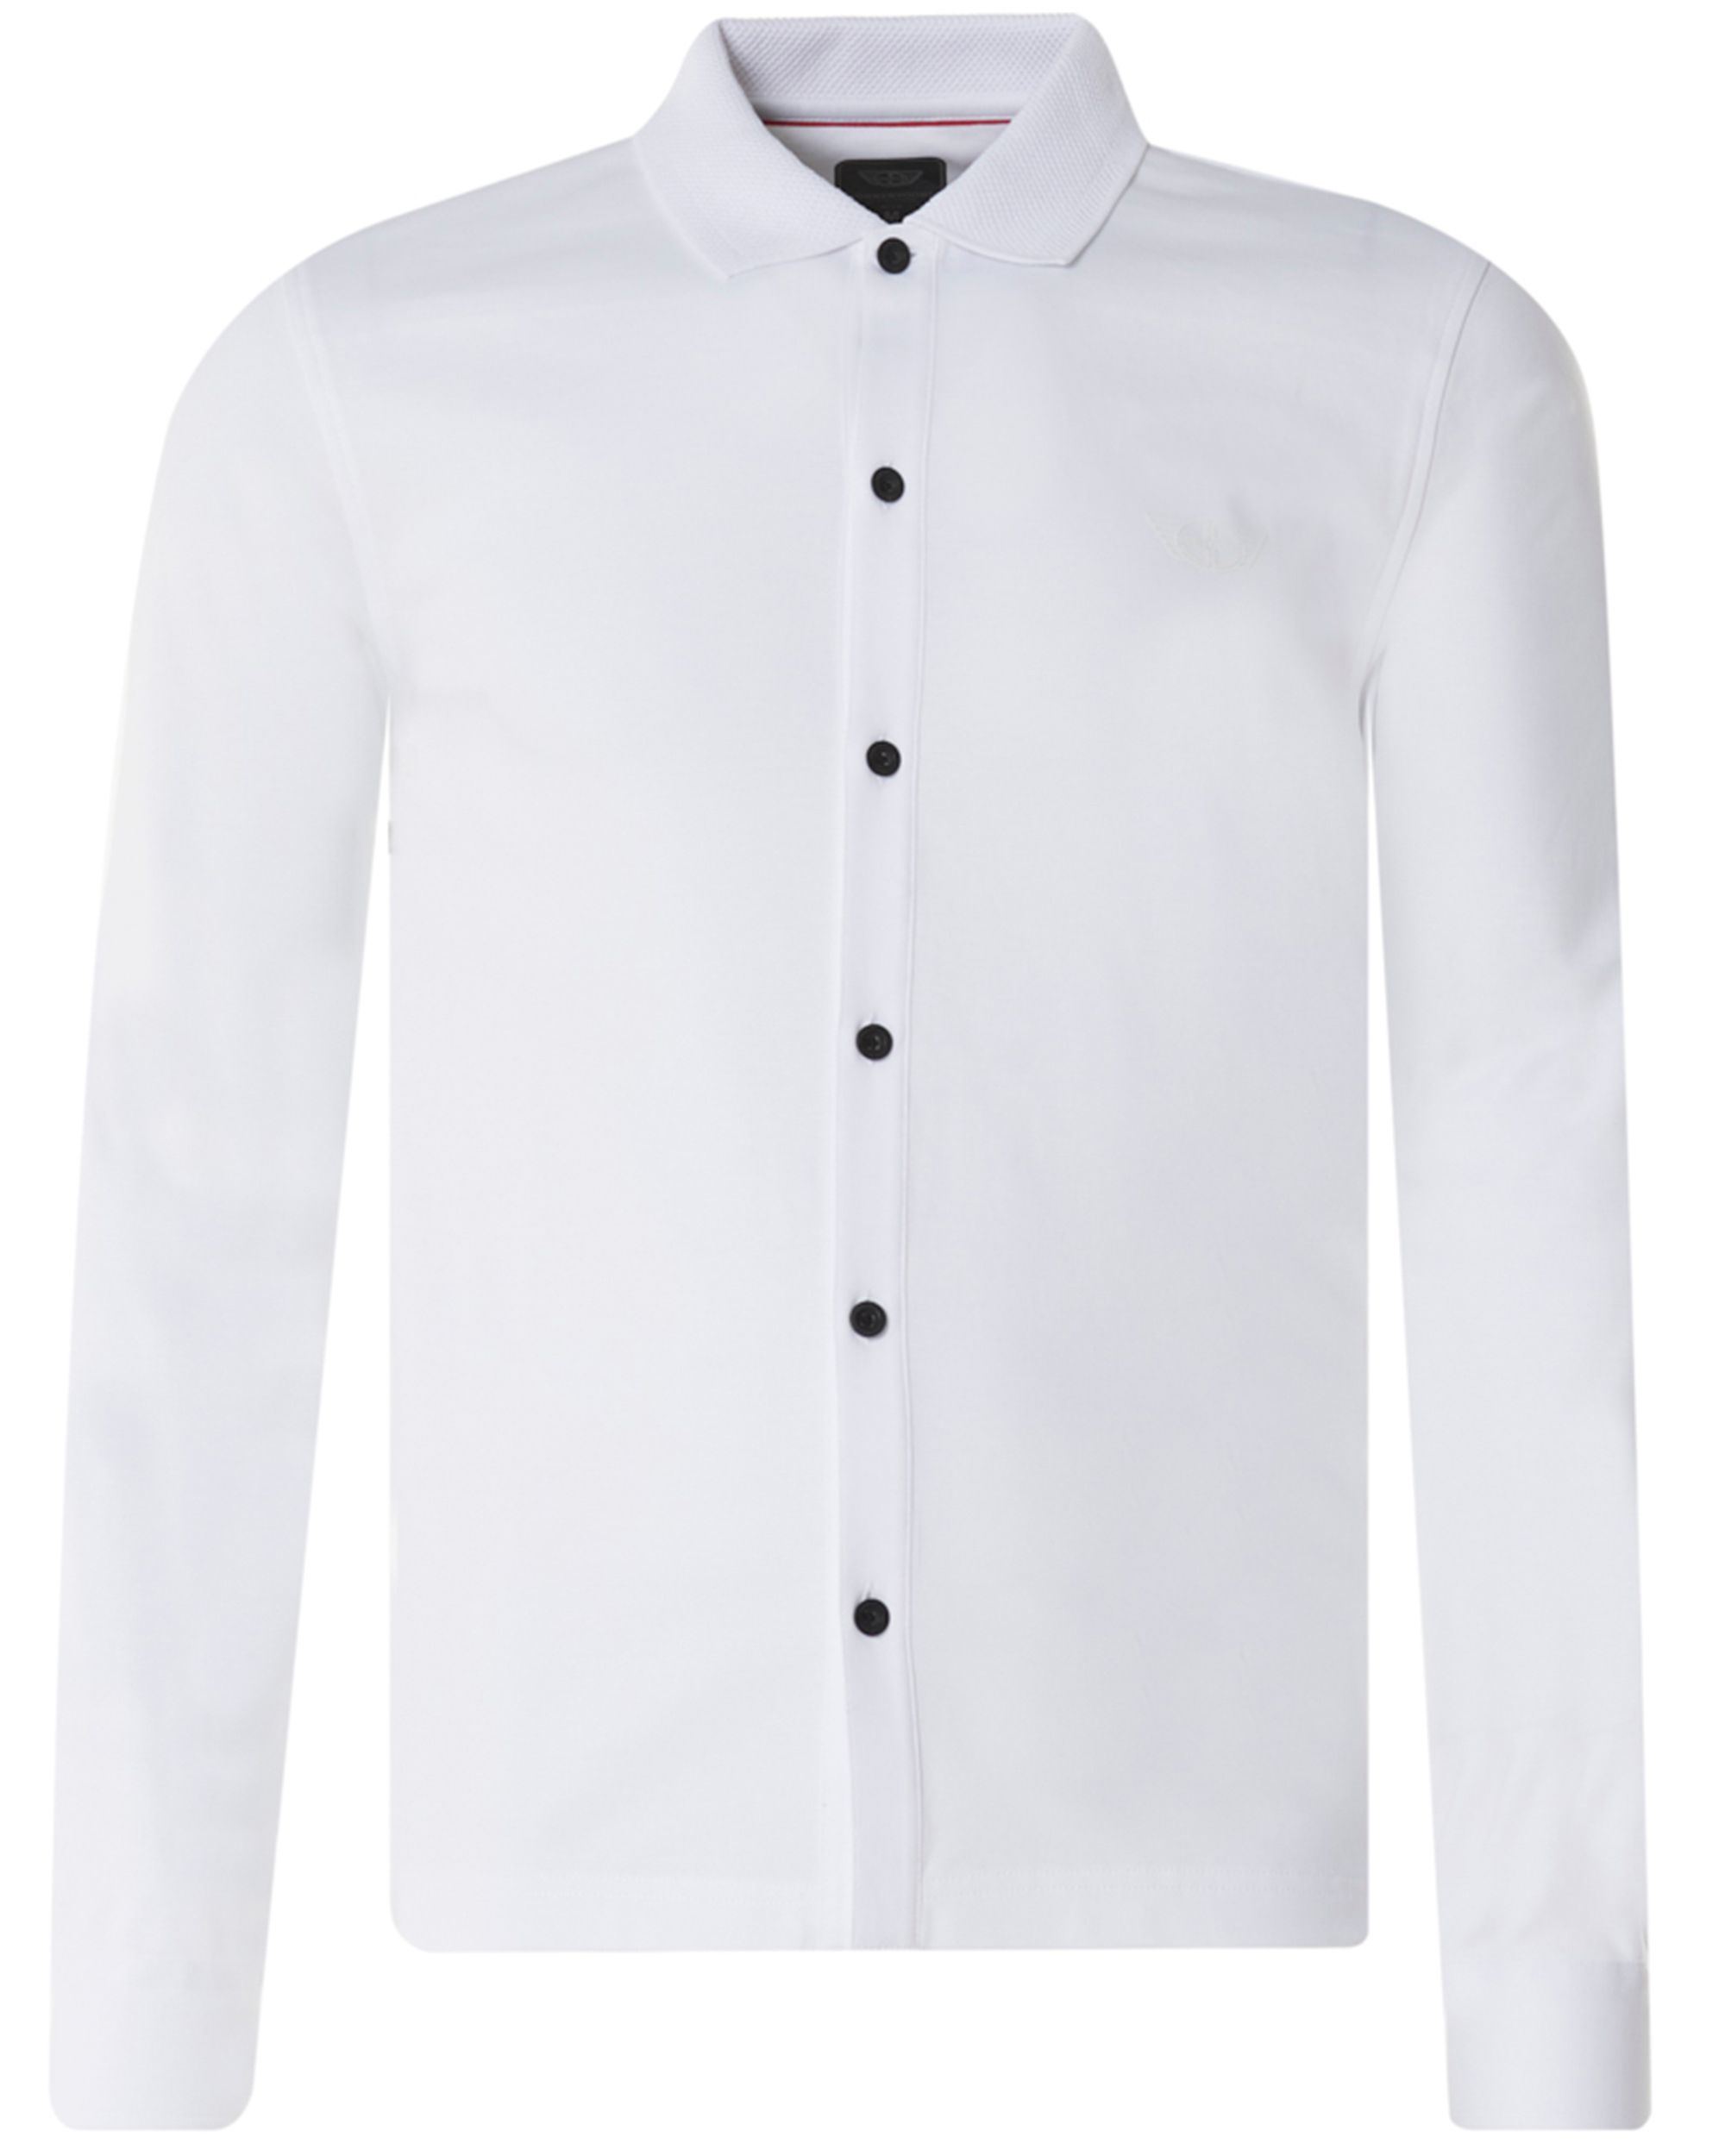 Donkervoort Casual Overhemd LM Wit uni 077572-003-L